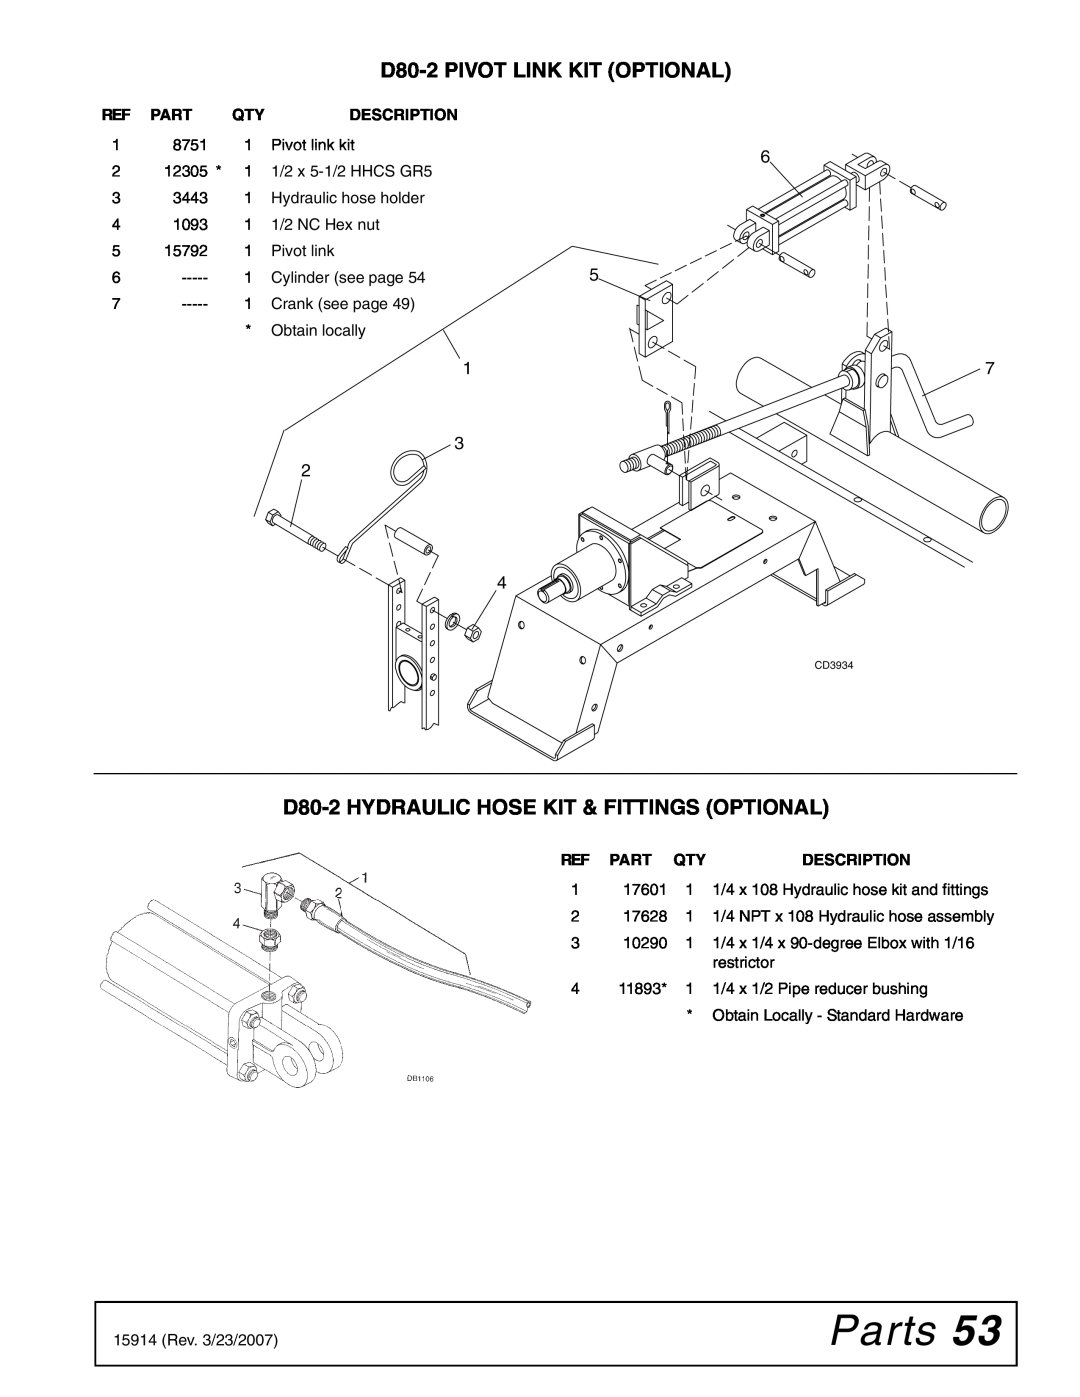 Woods Equipment MD80-2 Parts, D80-2PIVOT LINK KIT OPTIONAL, D80-2HYDRAULIC HOSE KIT & FITTINGS OPTIONAL, Description 